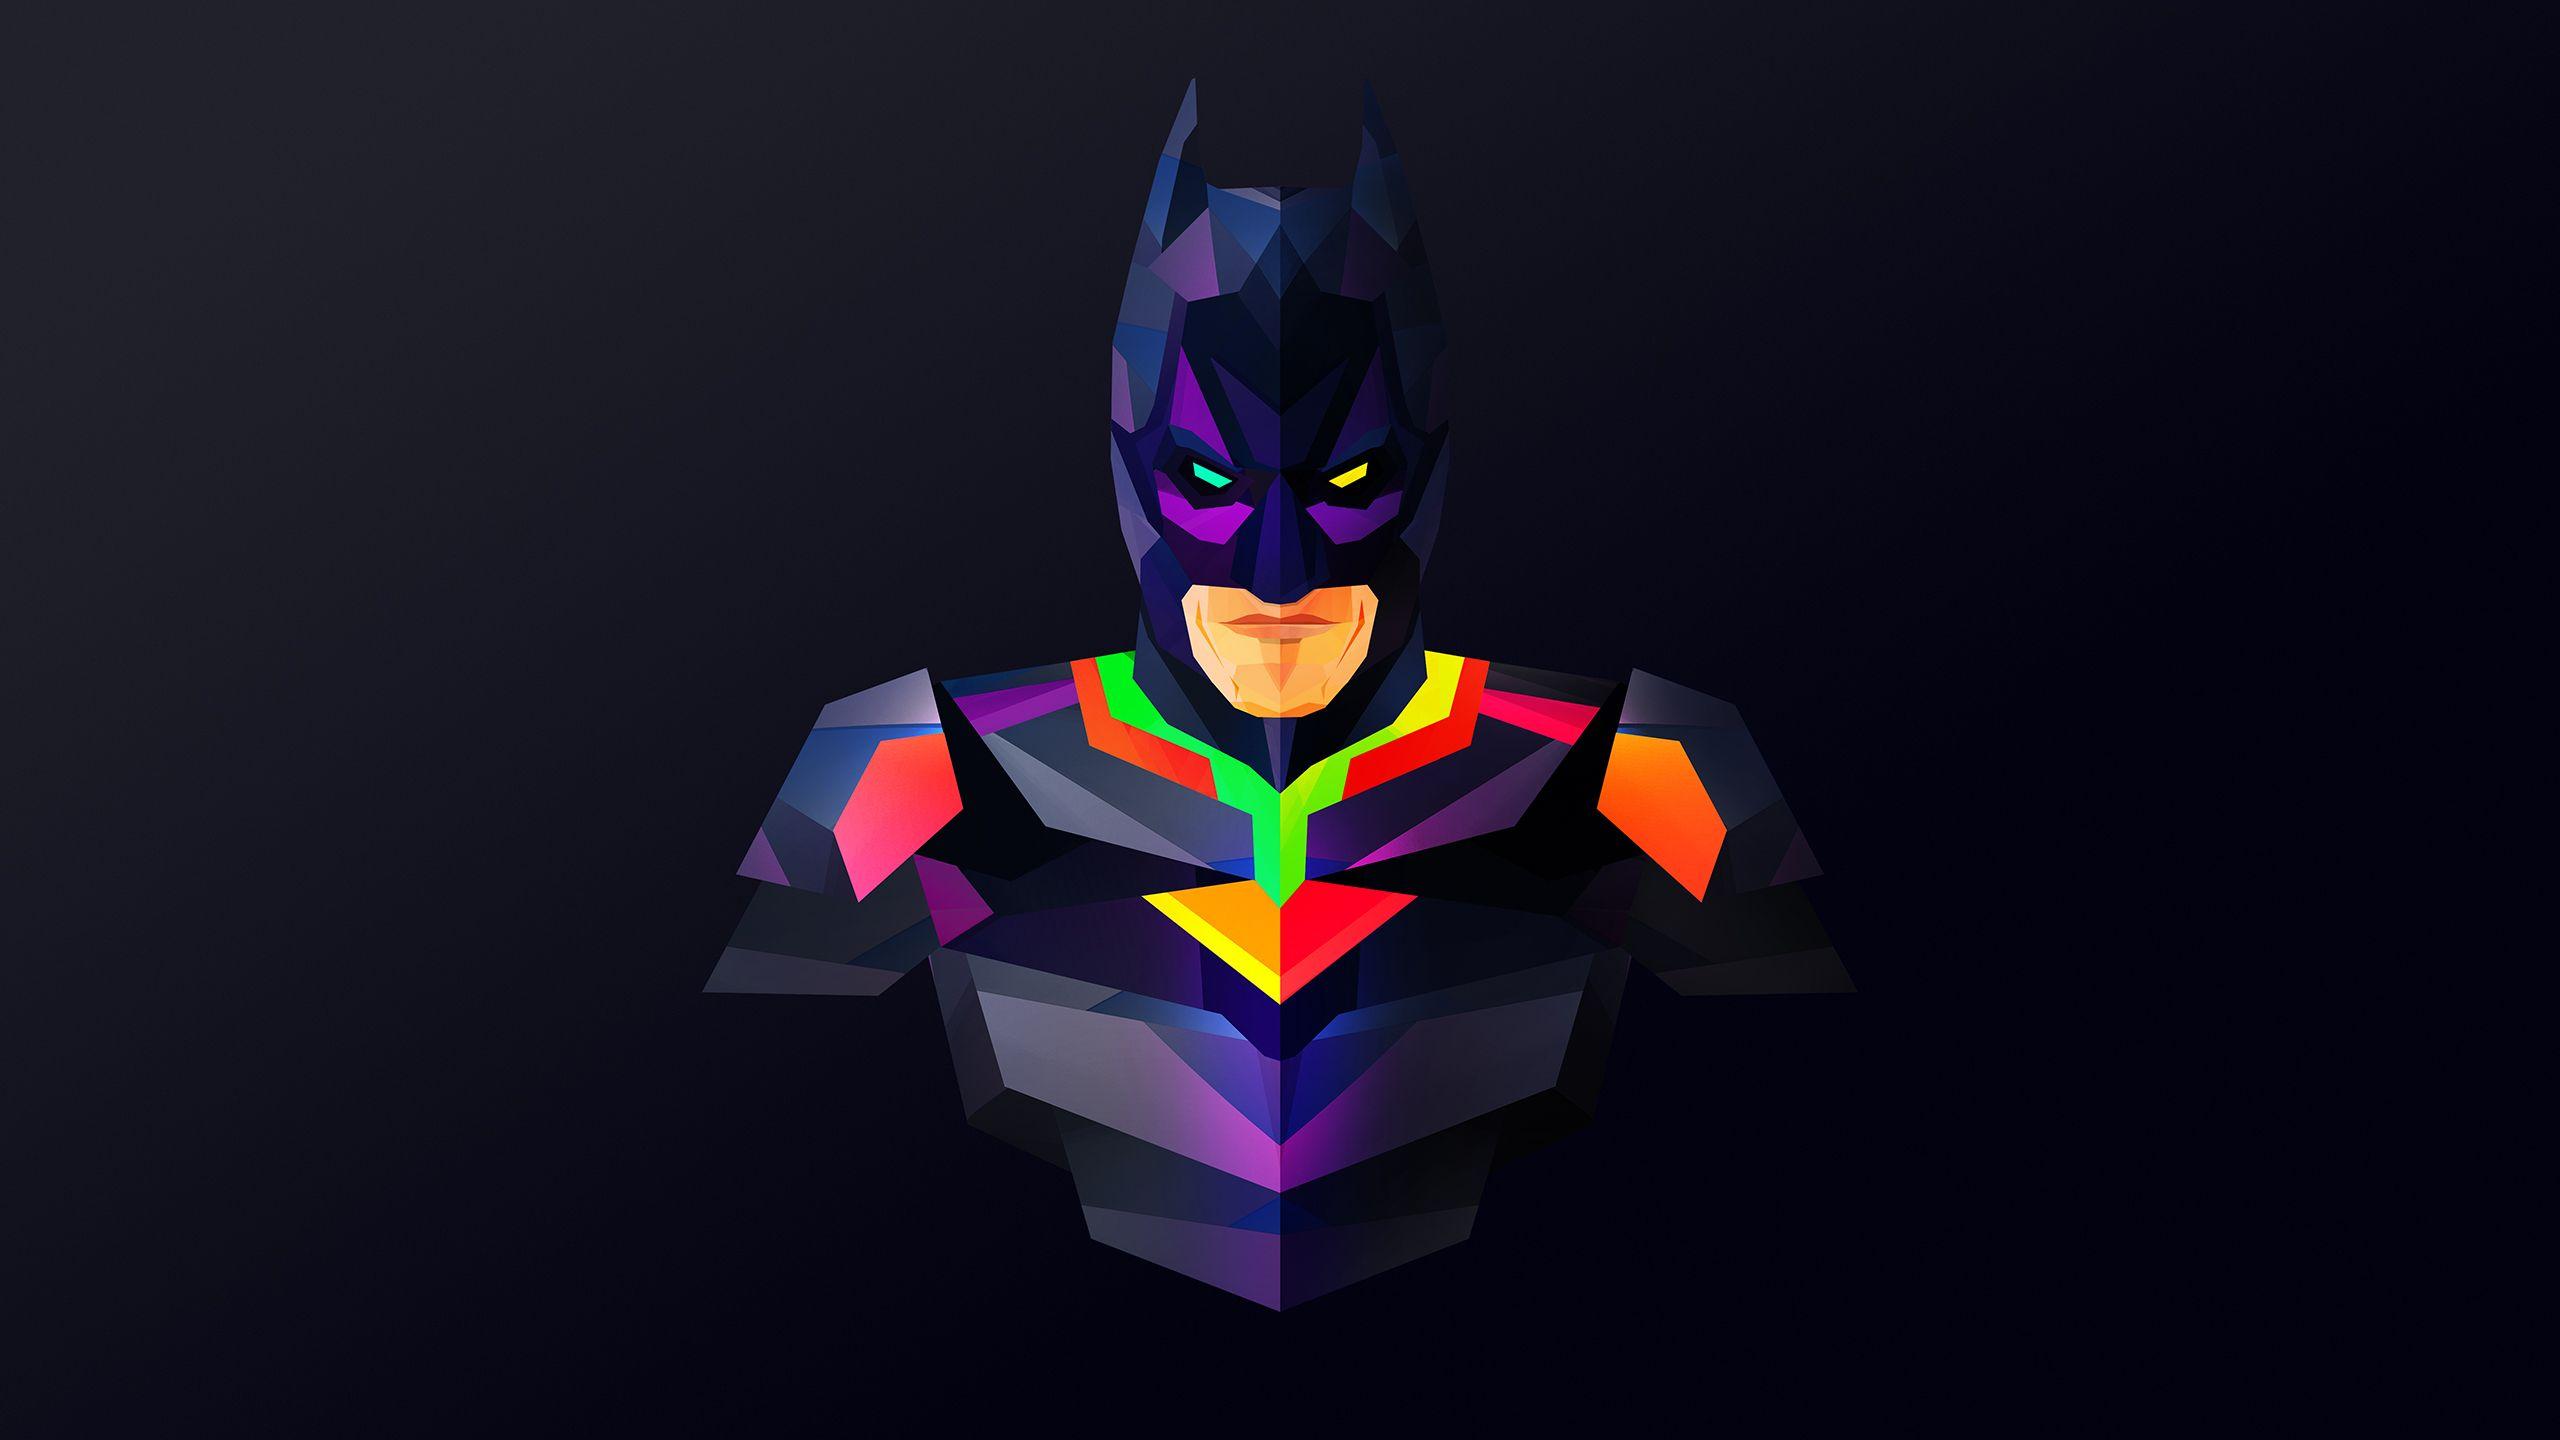 Abstract Batman Logo Wallpapers - Top ...